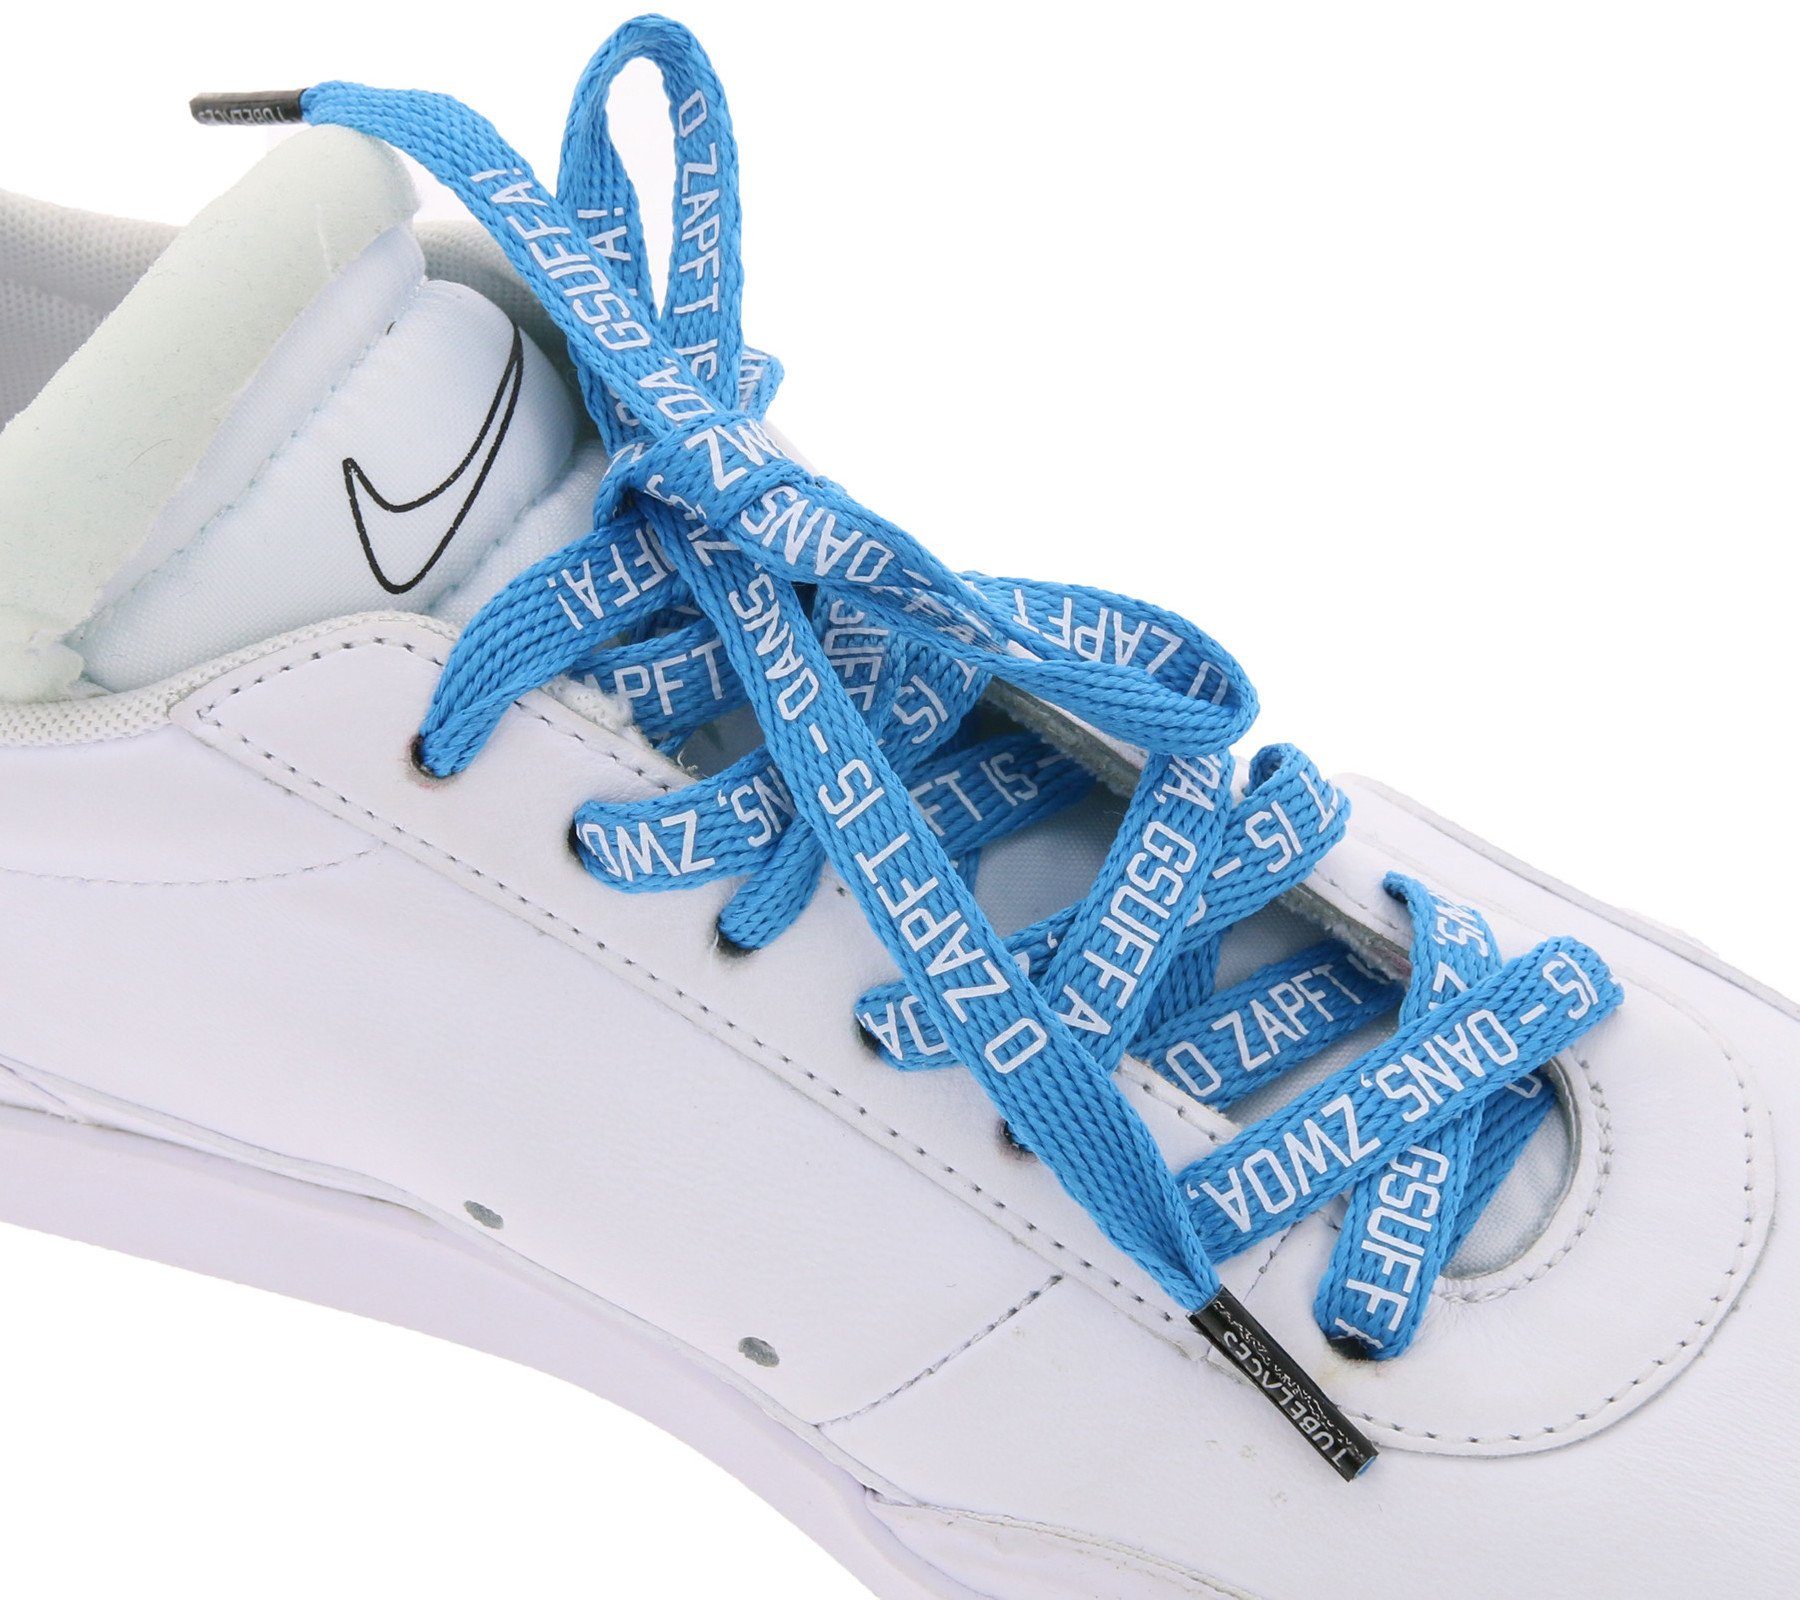 Tubelaces Schnürsenkel TubeLaces Schuhe Schnürbänder zweifarbige Schnürsenkel Schnürbänder O´zapft is Blau/Weiß